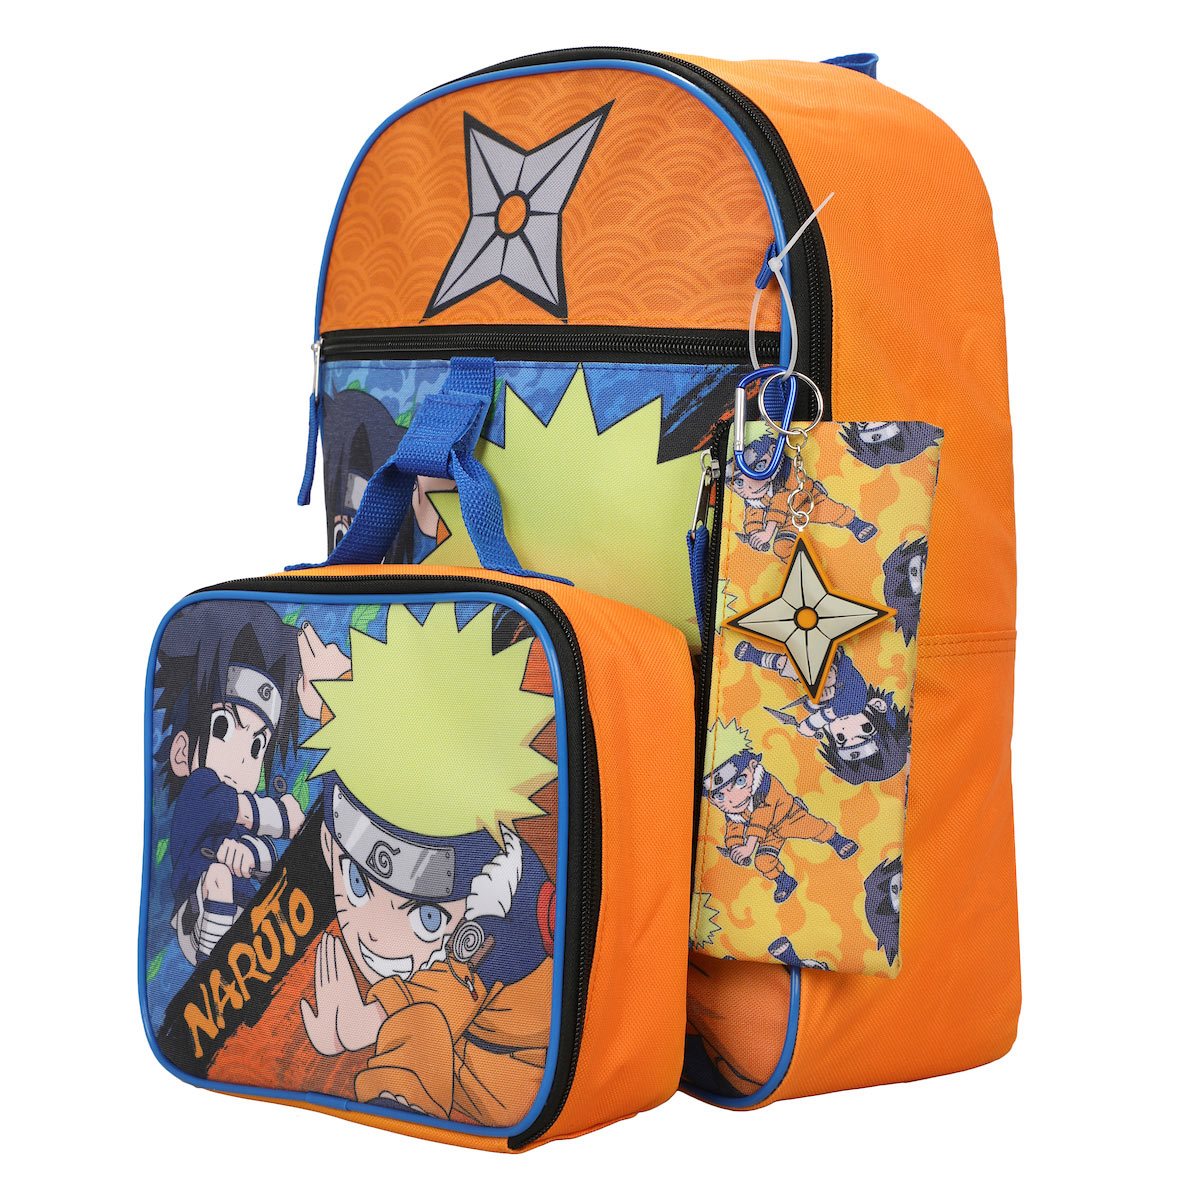 Bioworld Naruto Shippuden 5-Piece Backpack Set